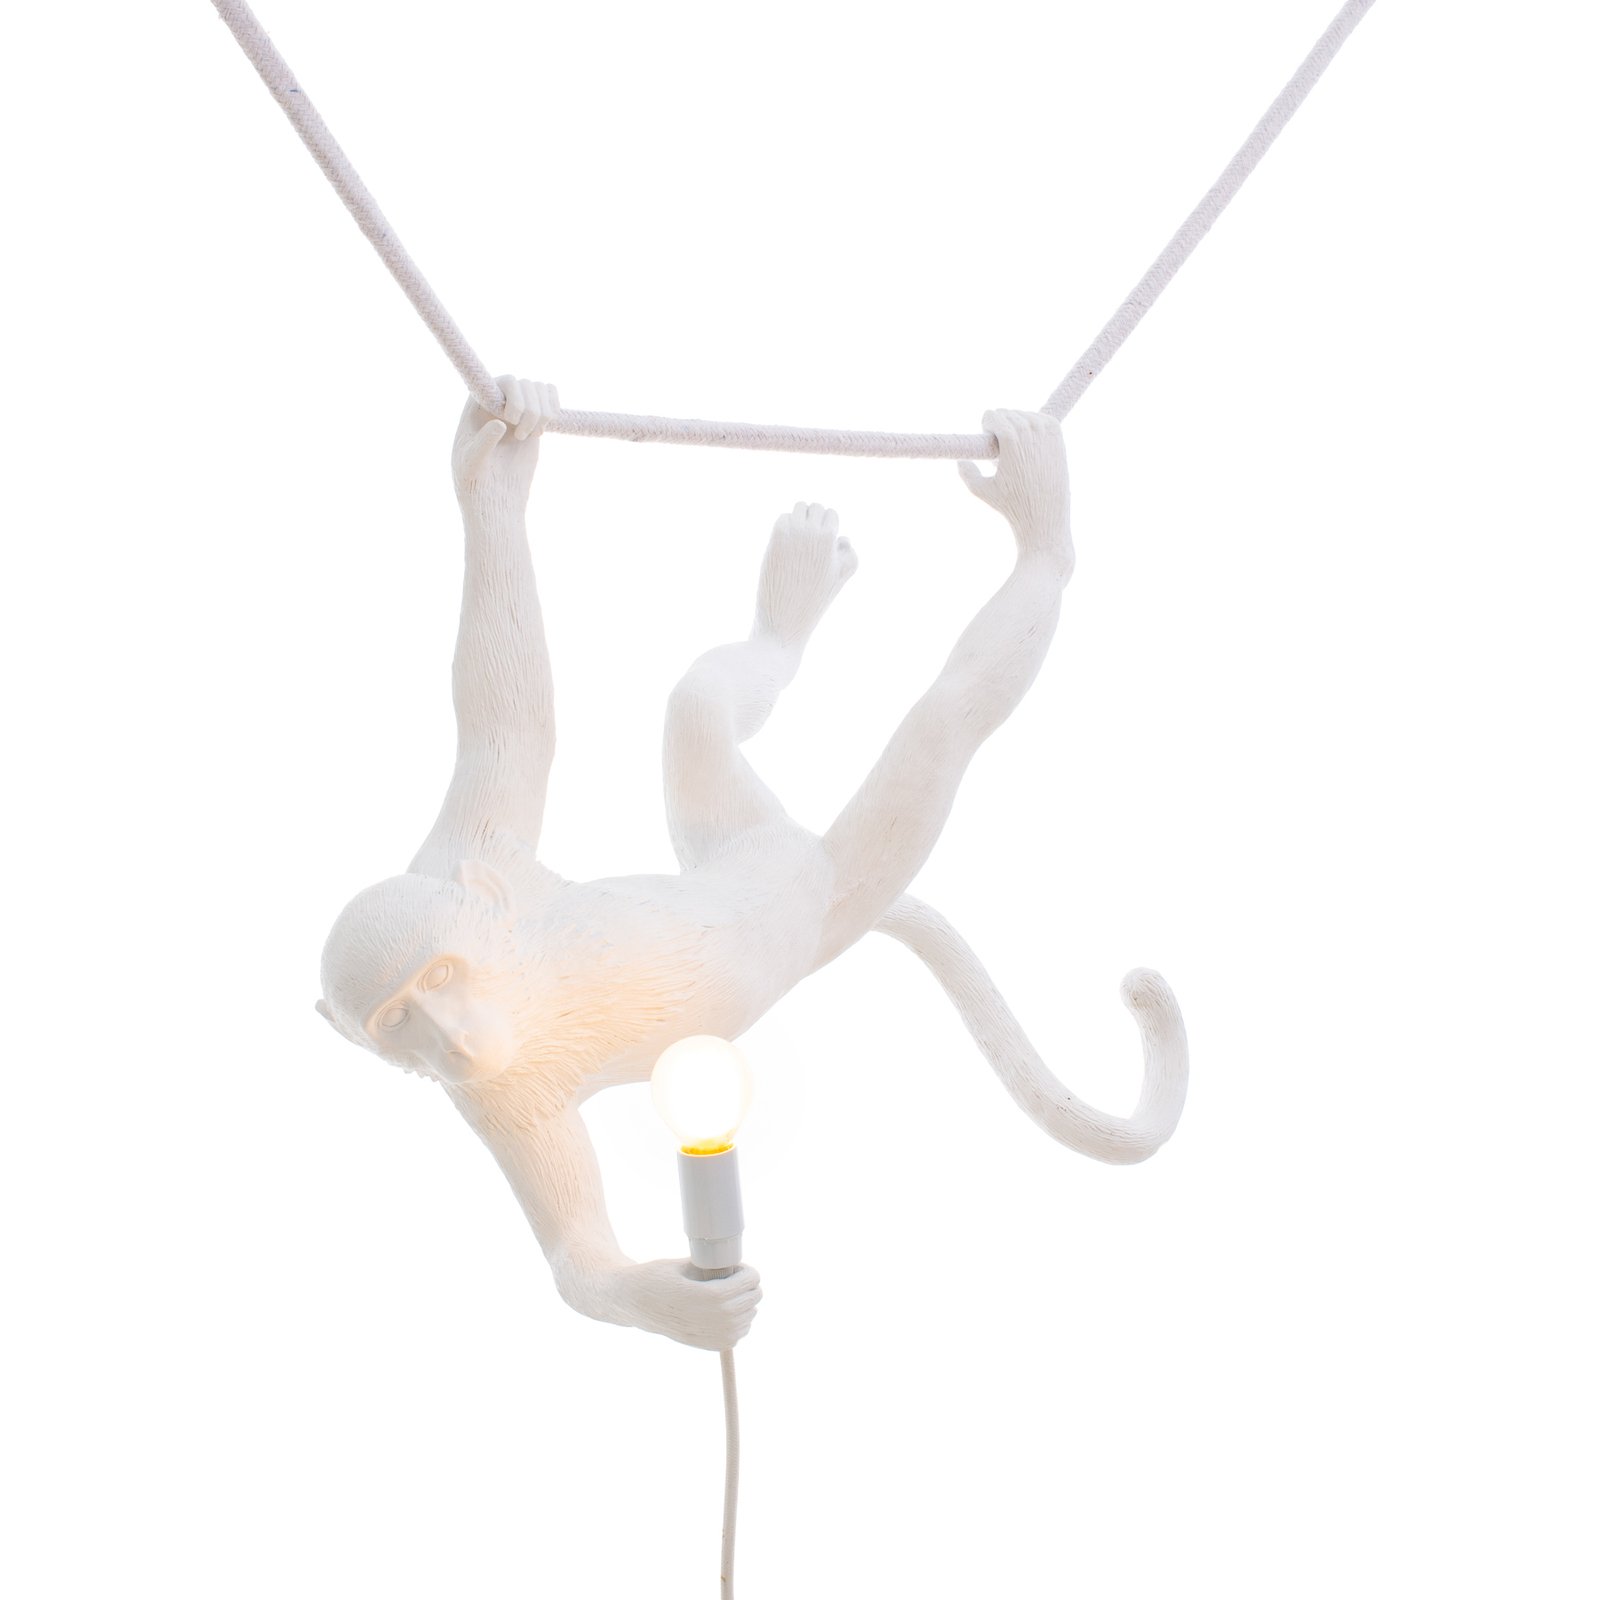 LED decoratie-hanglamp Monkey Lamp wit slingerend